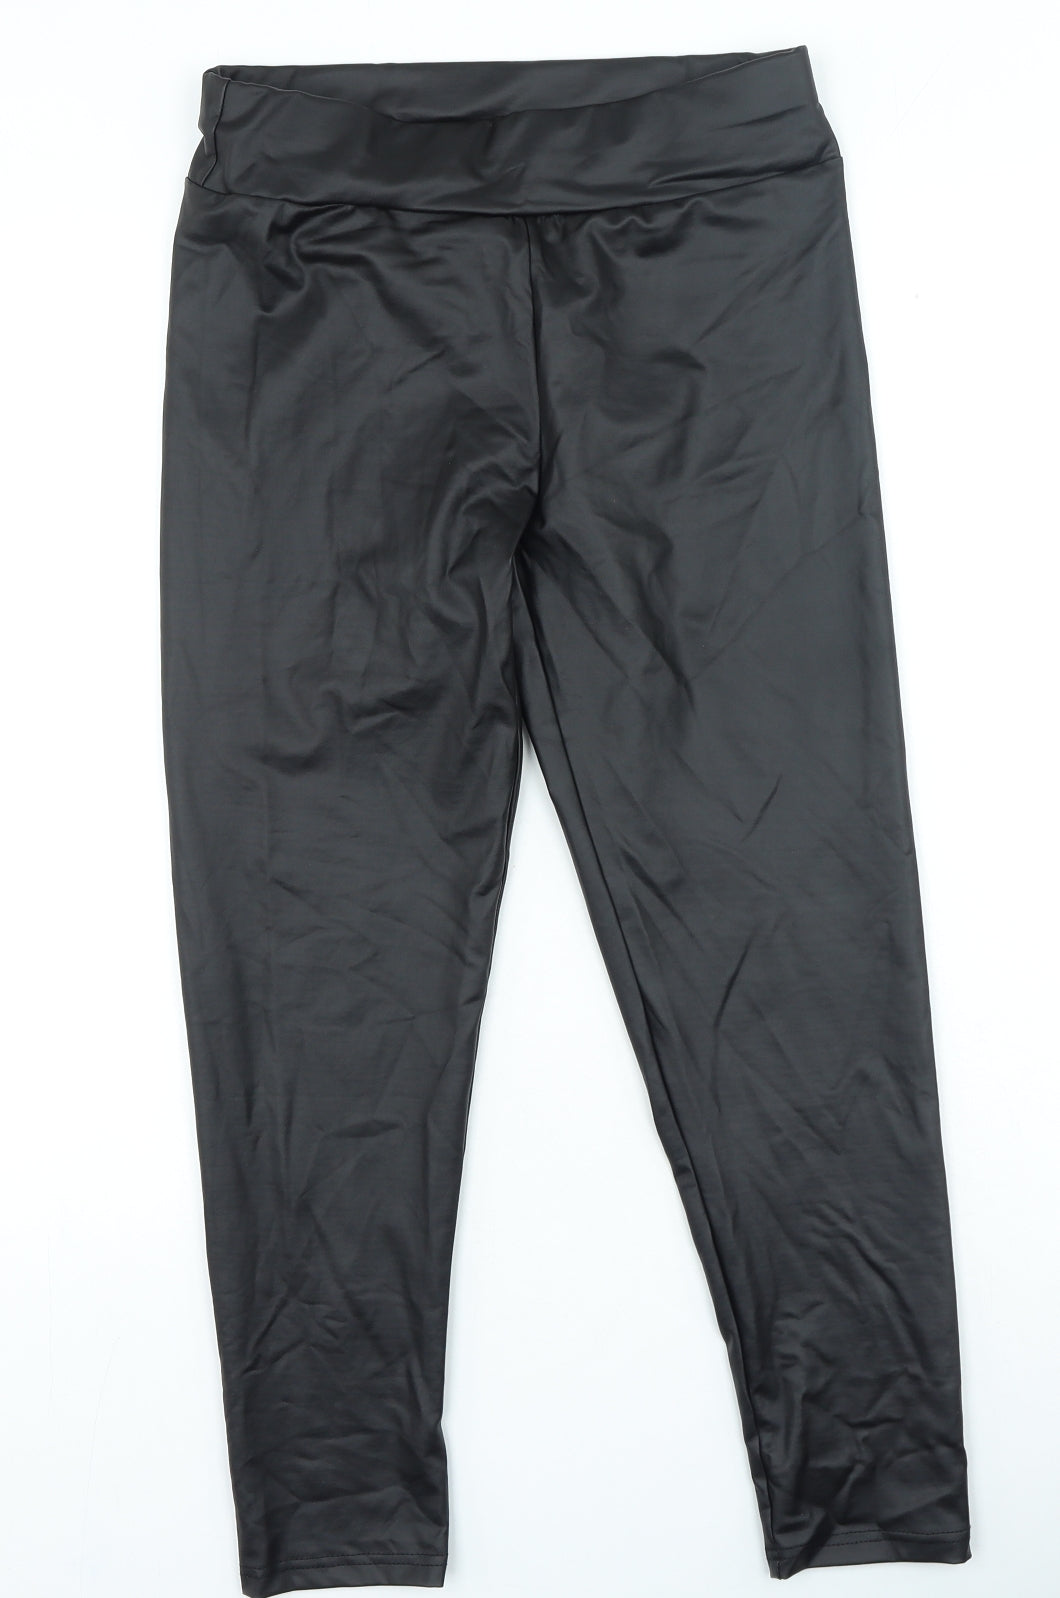 SheIn Womens Black Polyester Jegging Leggings Size L L23 in